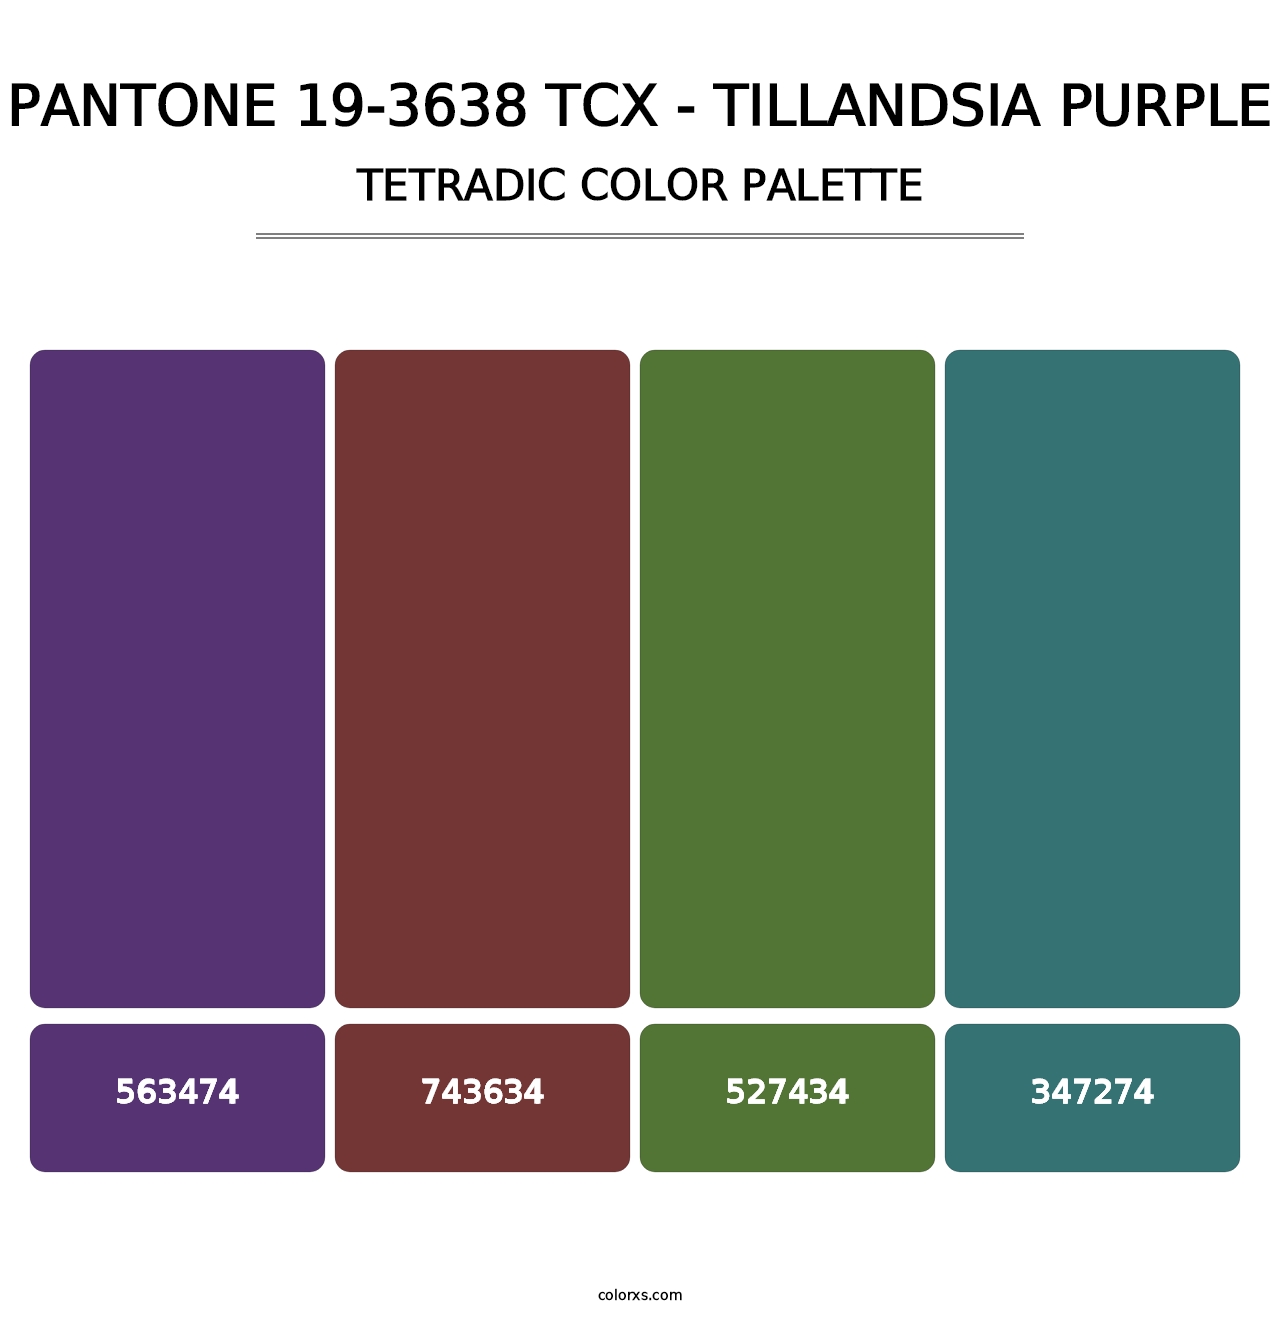 PANTONE 19-3638 TCX - Tillandsia Purple - Tetradic Color Palette